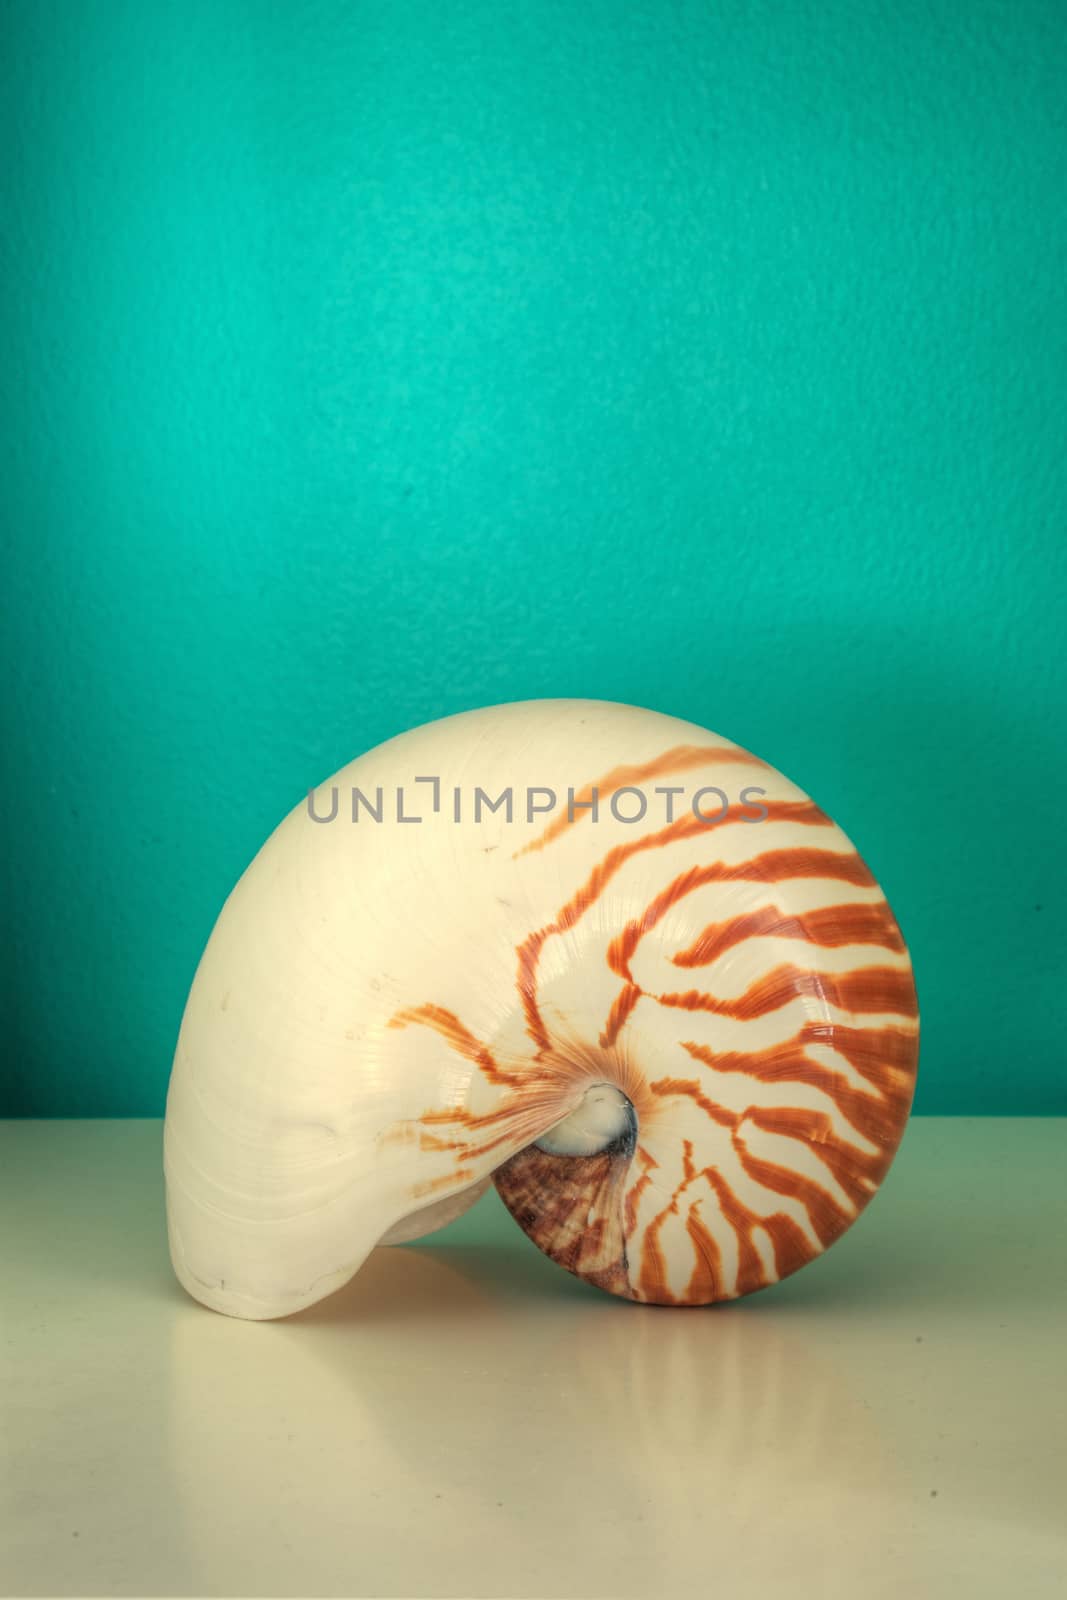 Nautilus, Nautilus pompilius, shell against an aqua blue green b by steffstarr